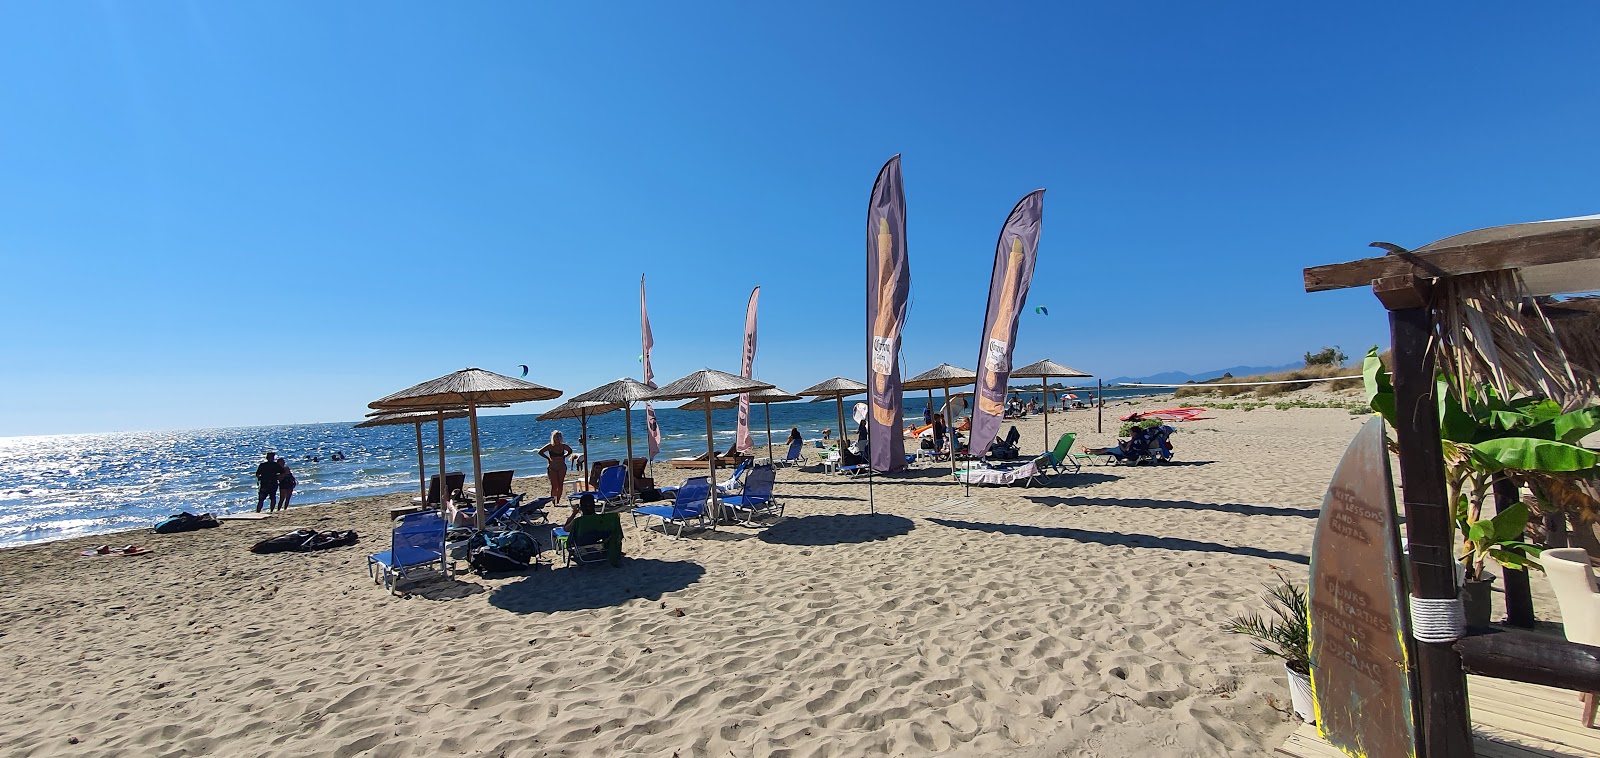 Foto de Agios Nikolaos 2nd beach - lugar popular entre os apreciadores de relaxamento